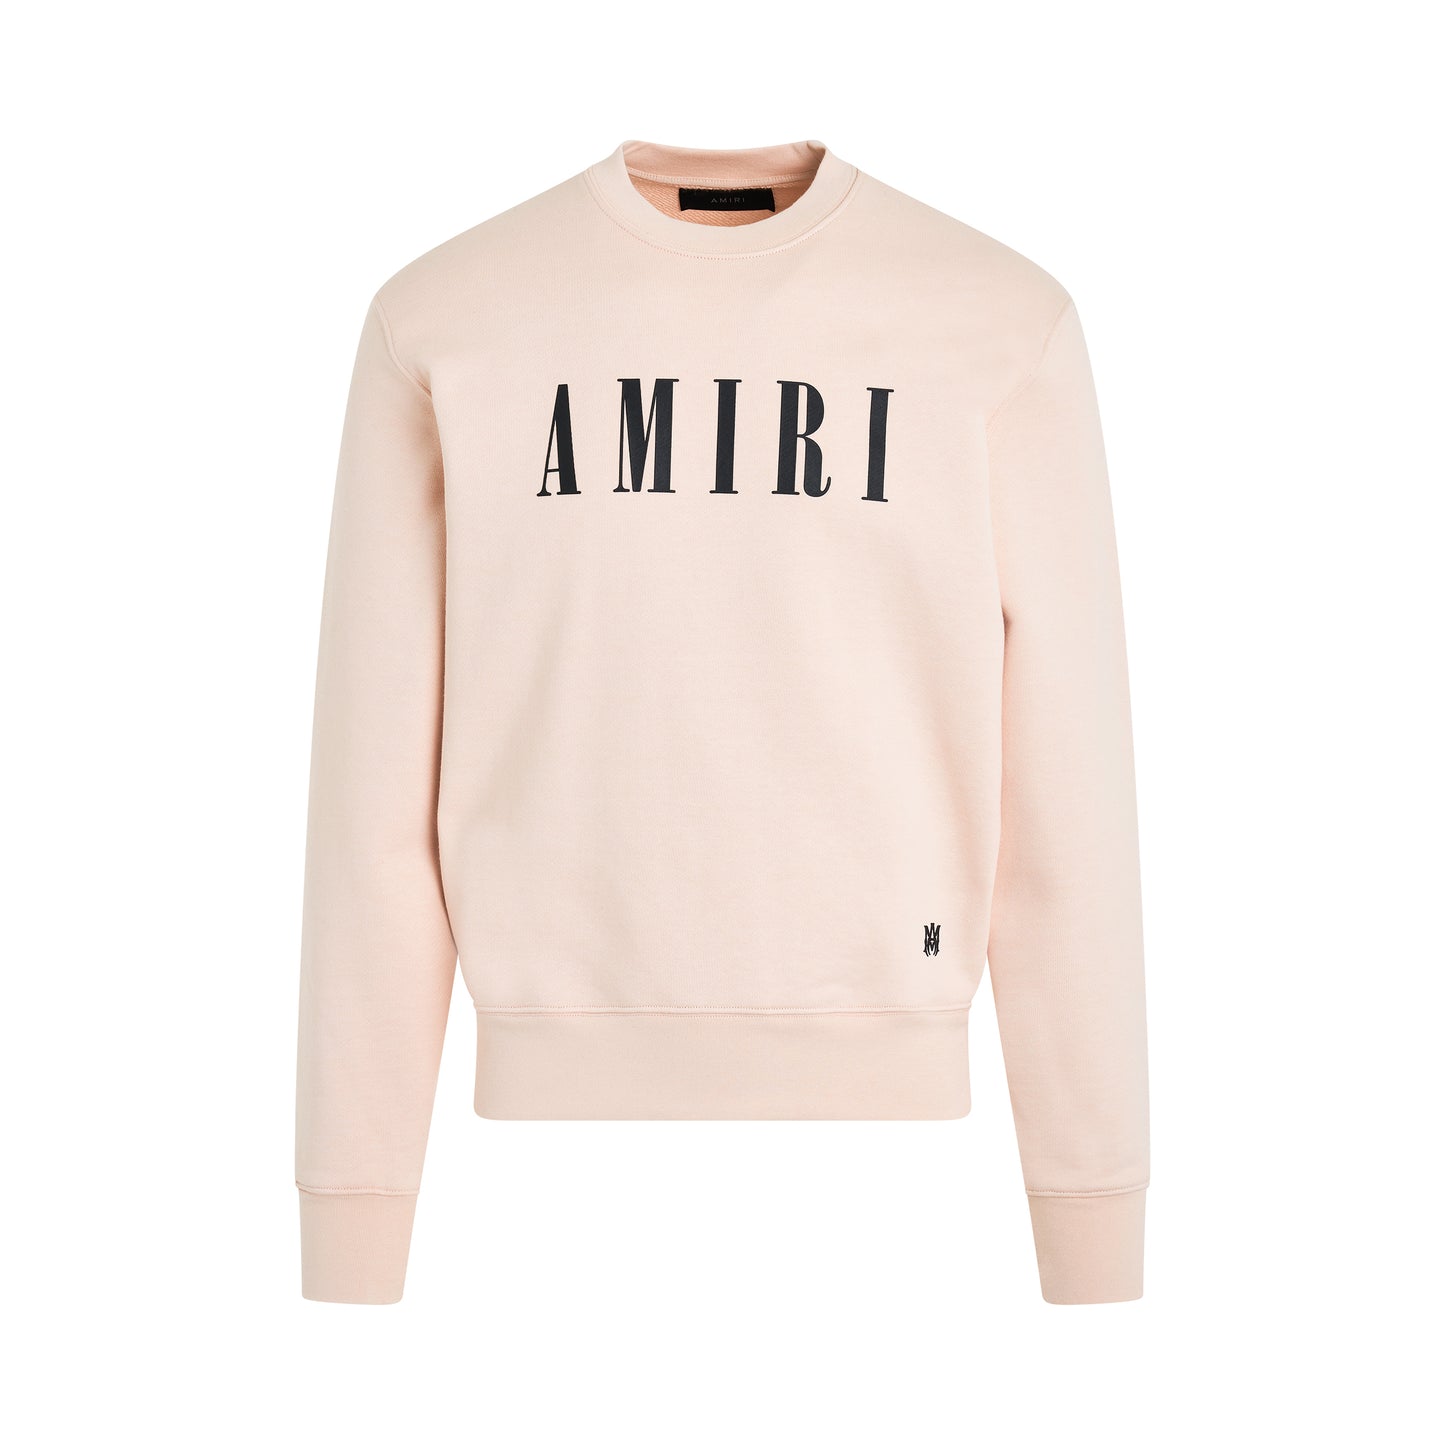 Amiri Core Logo Sweatshirt in Cream Tan